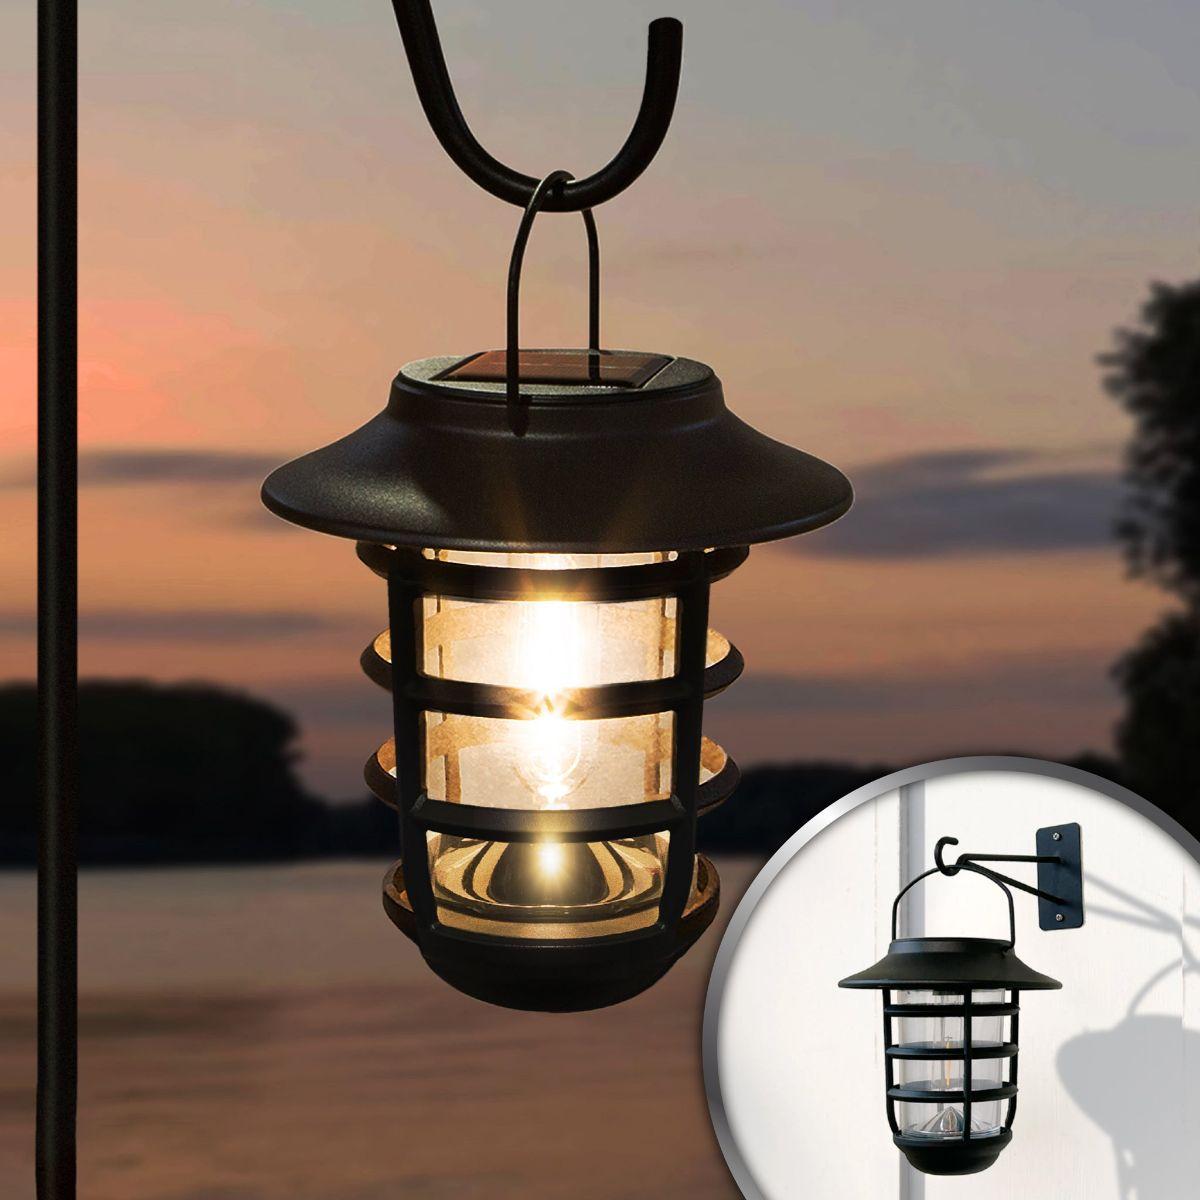 Nottingham Solar LED Outdoor Hanging Lantern 2700K Black finish (Pack Of 2)